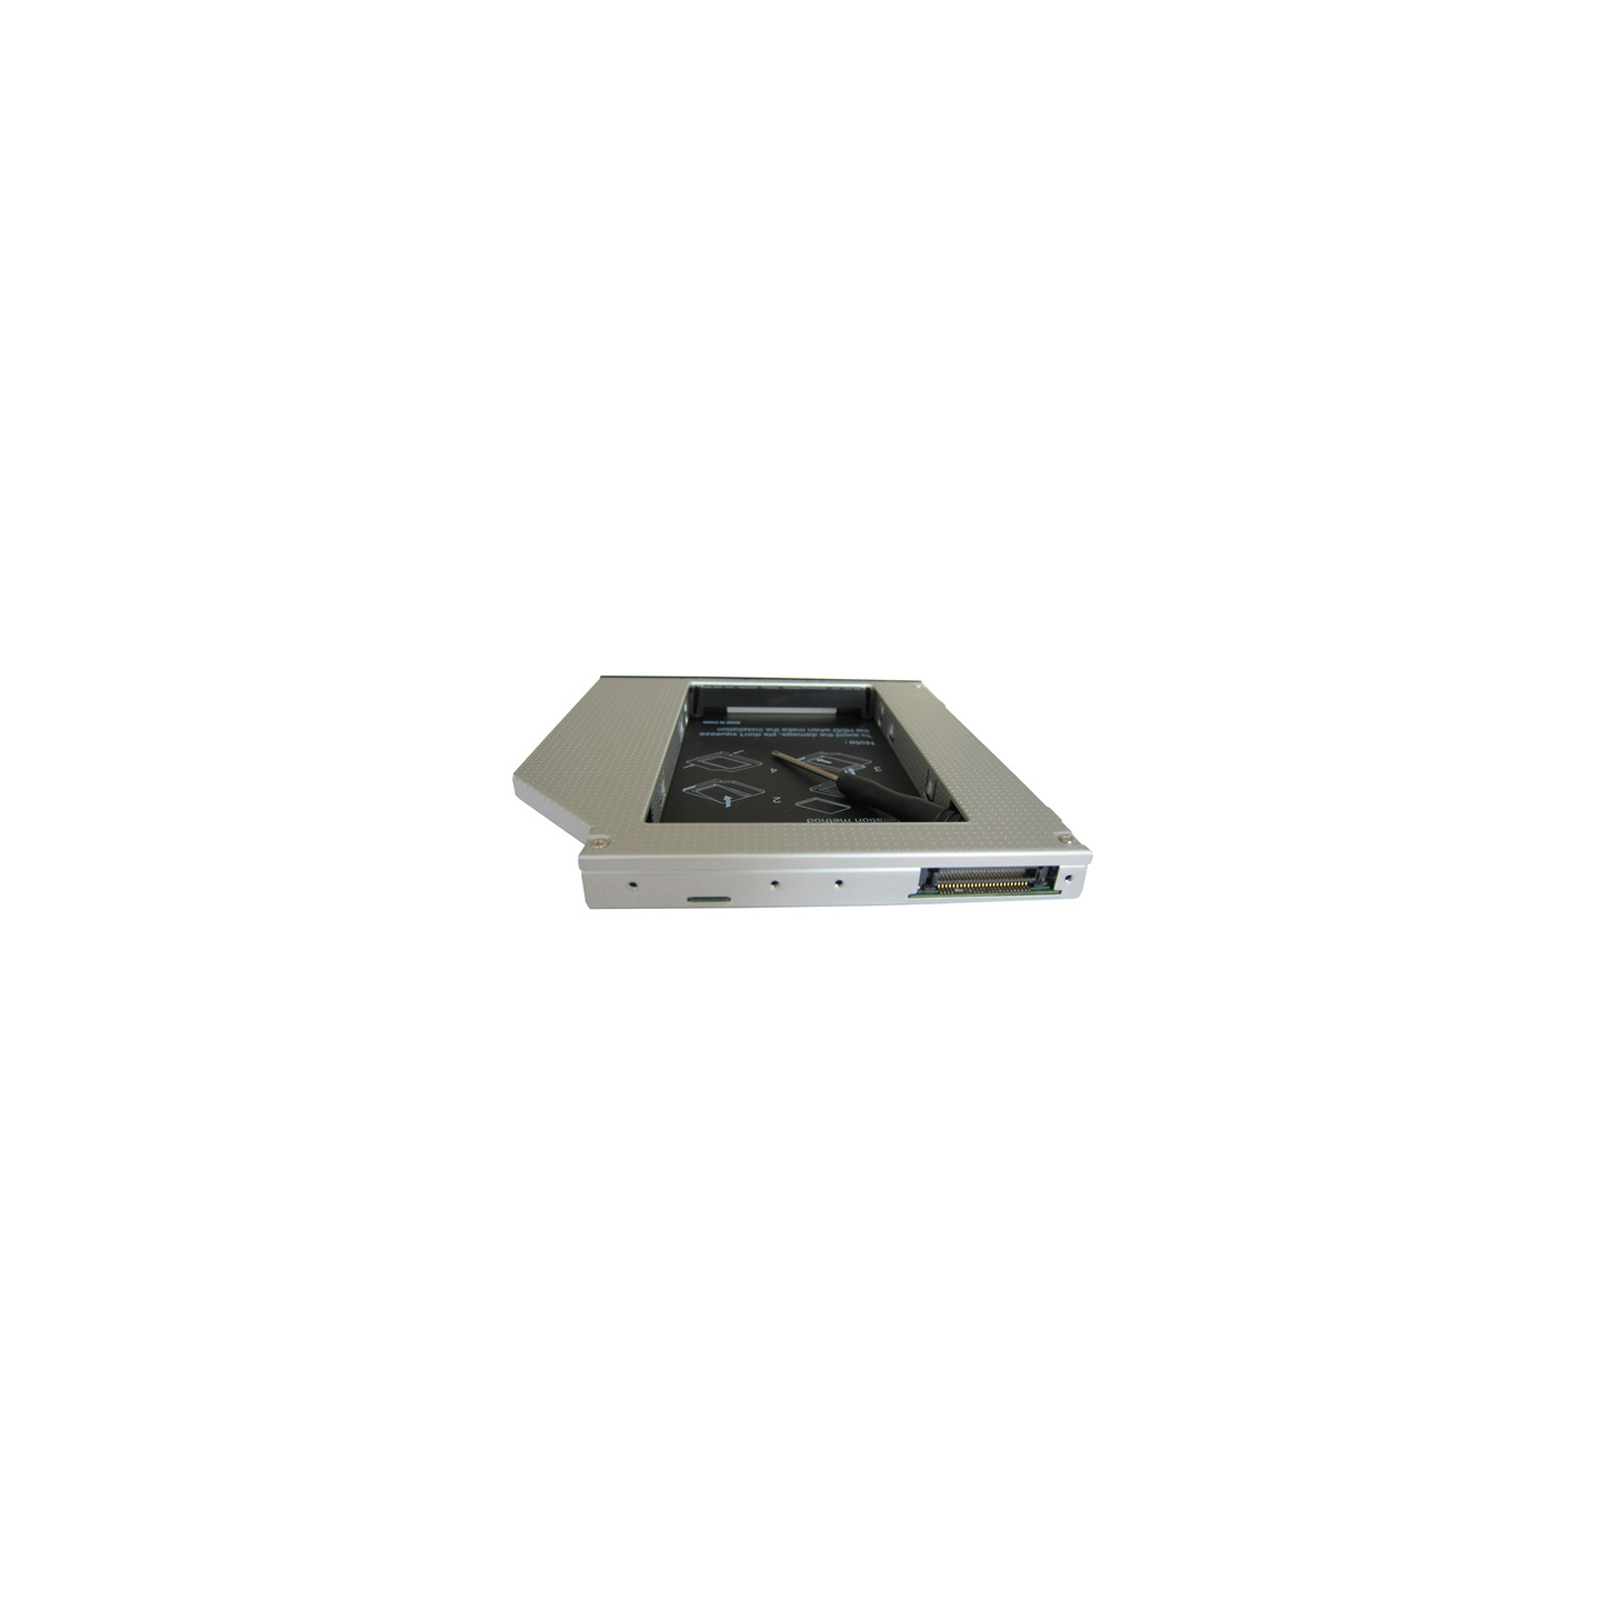 Фрейм-переходник Maiwo 2,5" 12.7 mm HDD/SSD SATA IDE (NSTOR-12-IDE) изображение 2